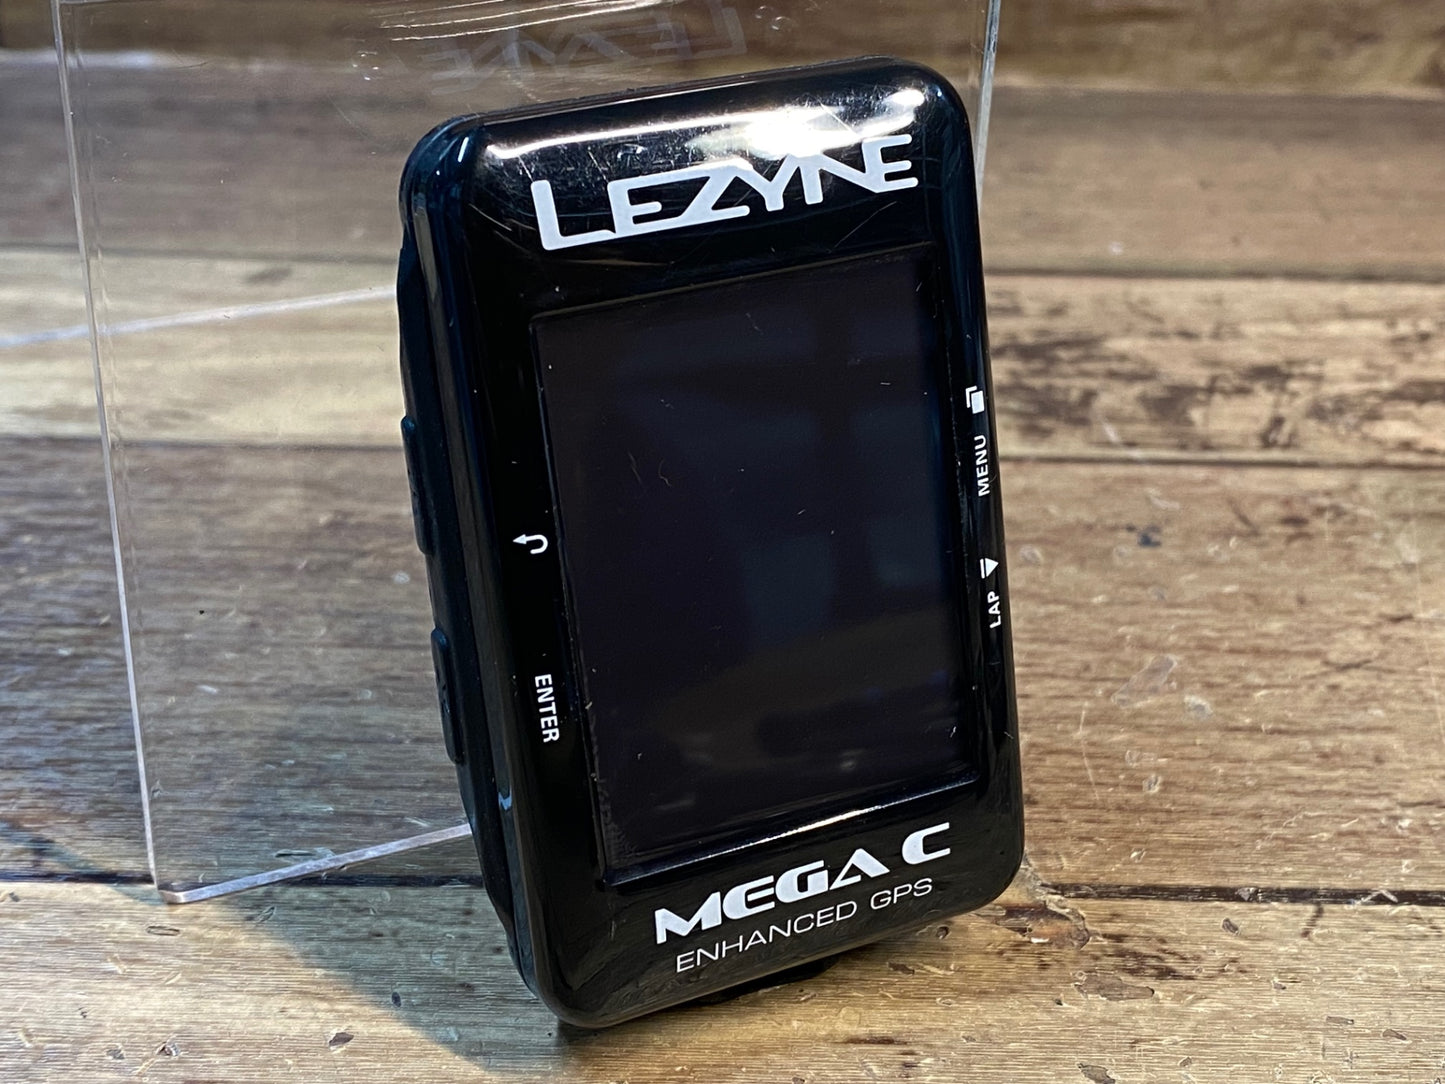 HK850 レザイン LEZYNE MEGA C ENHANCED GPS サイクルコンピューター センサー無 動作確認済